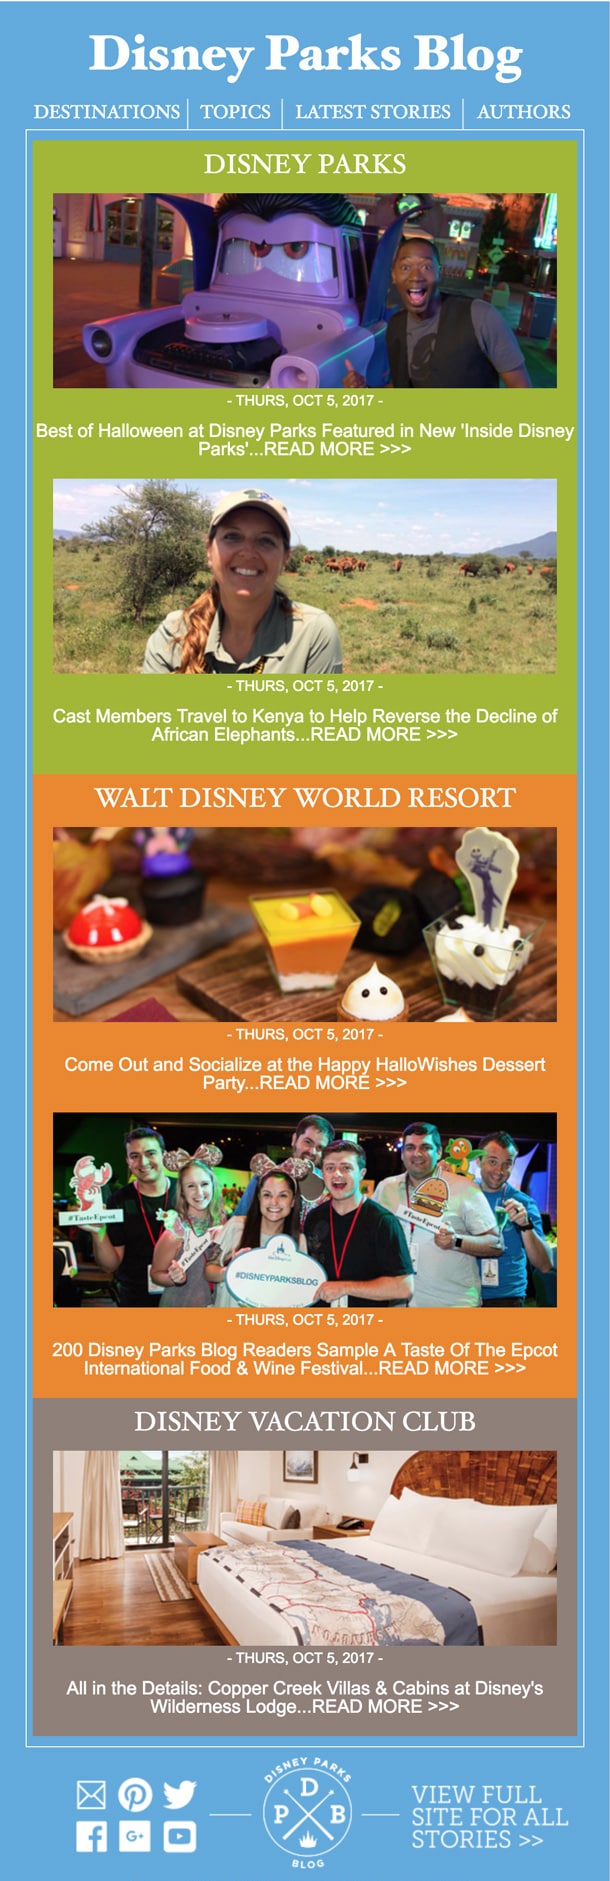 Disney Parks Blog Email Newsletter